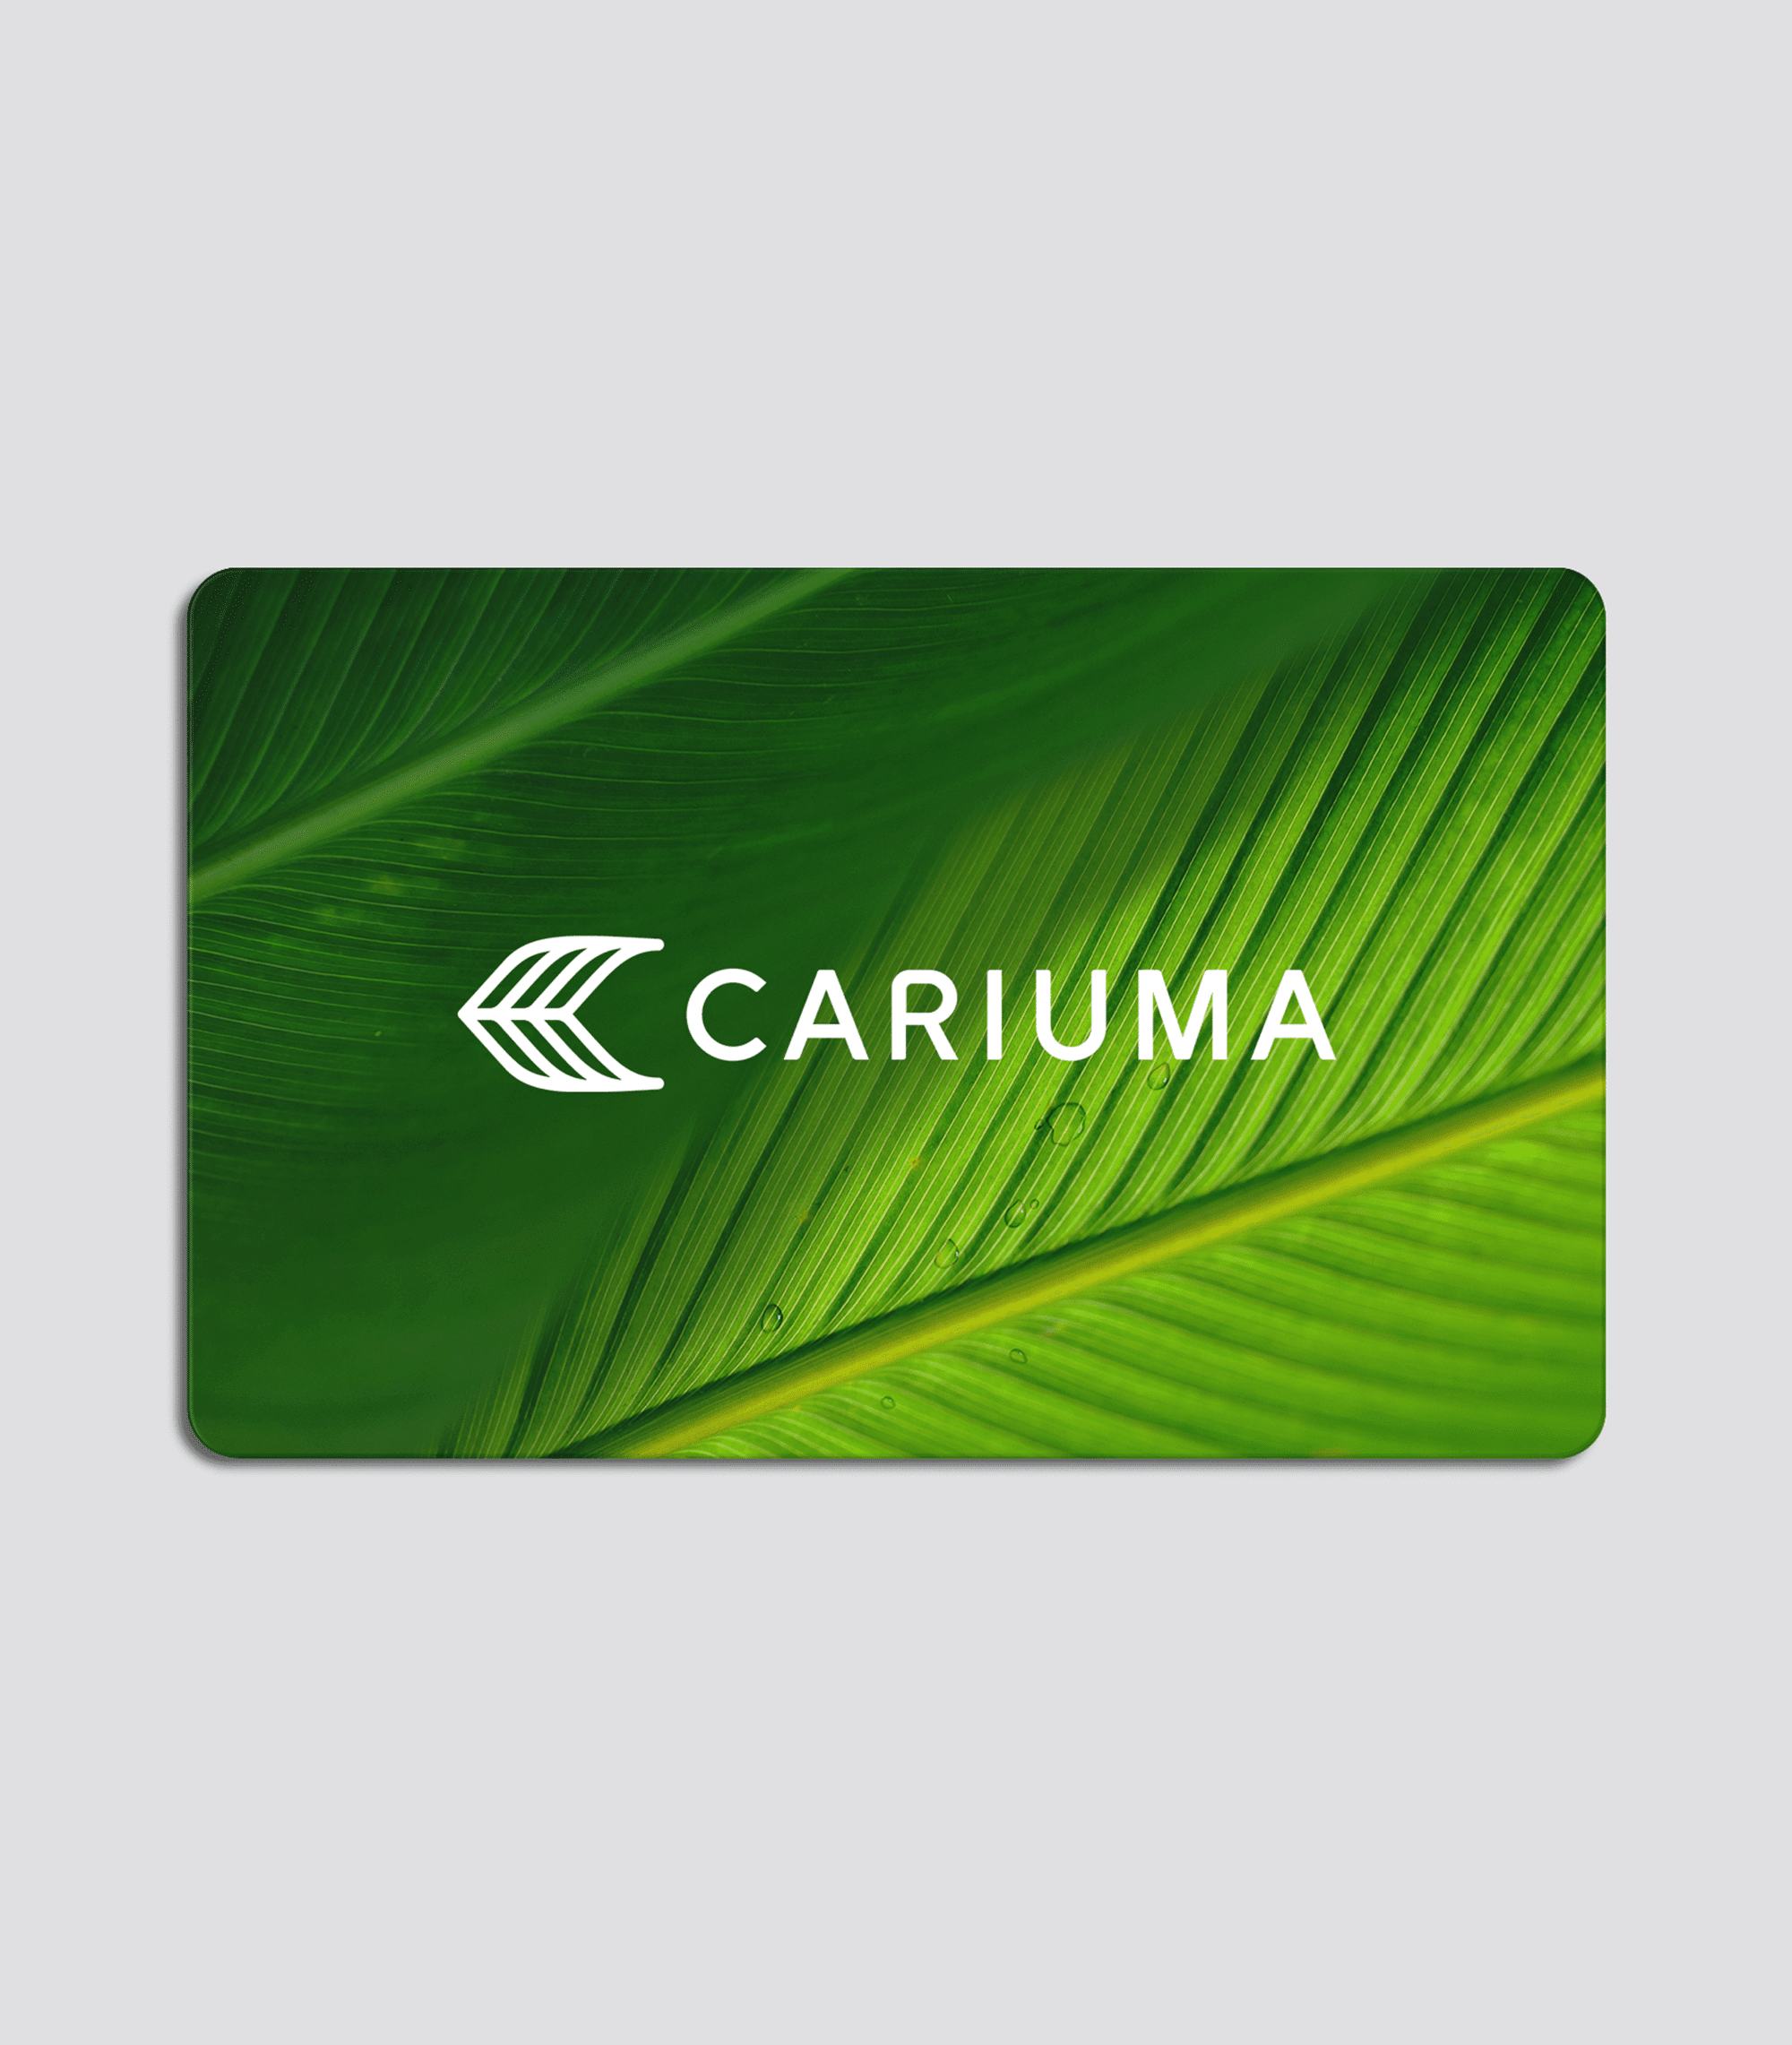 Cariuma Digital Gift Card size: